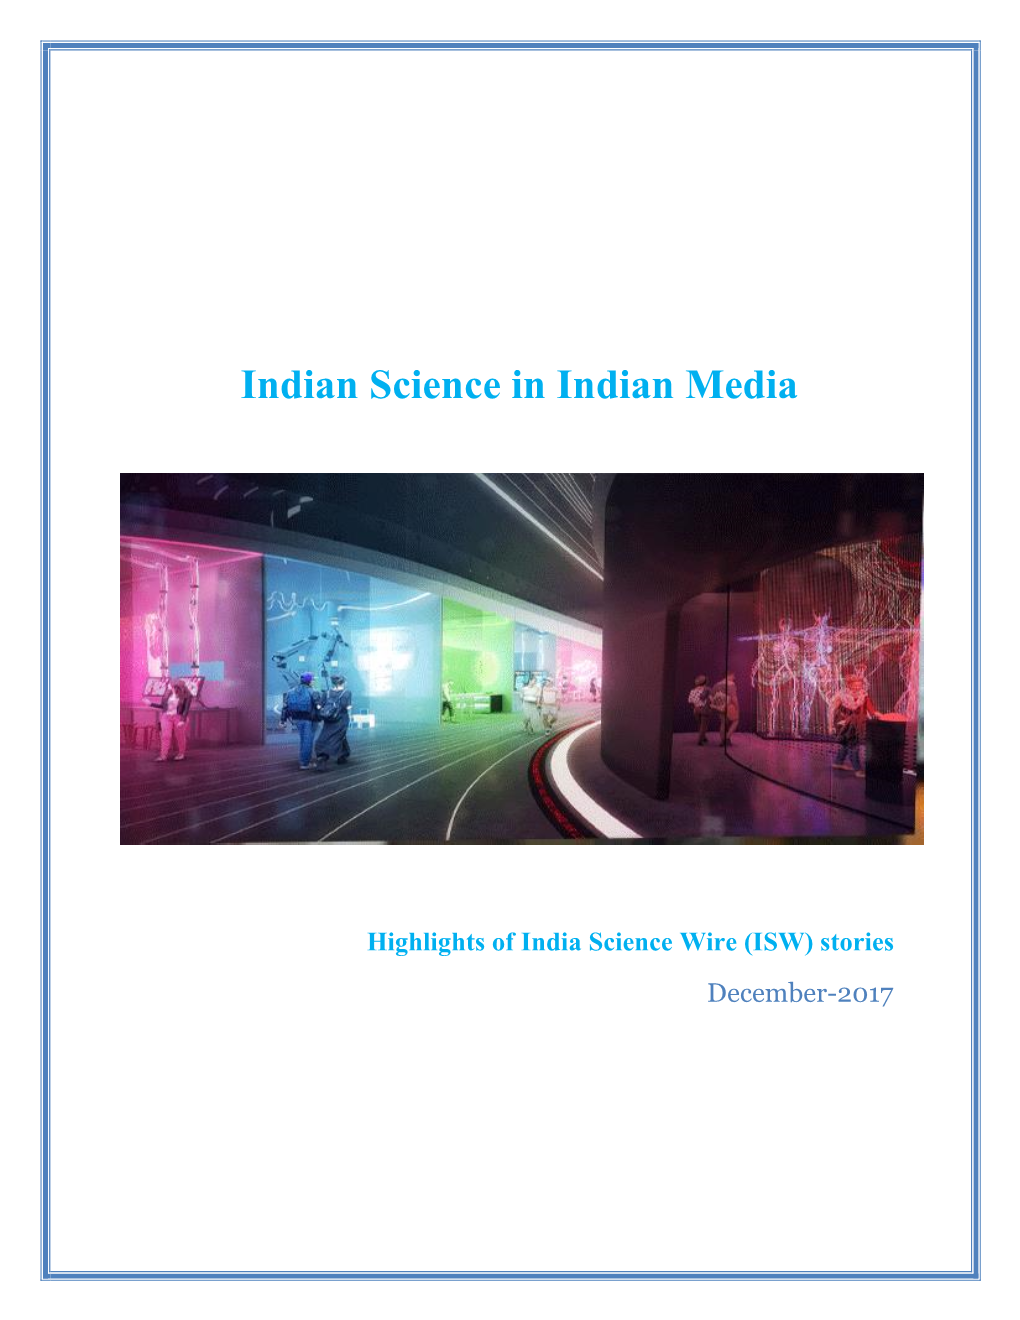 India Science in Indian Media December 2017